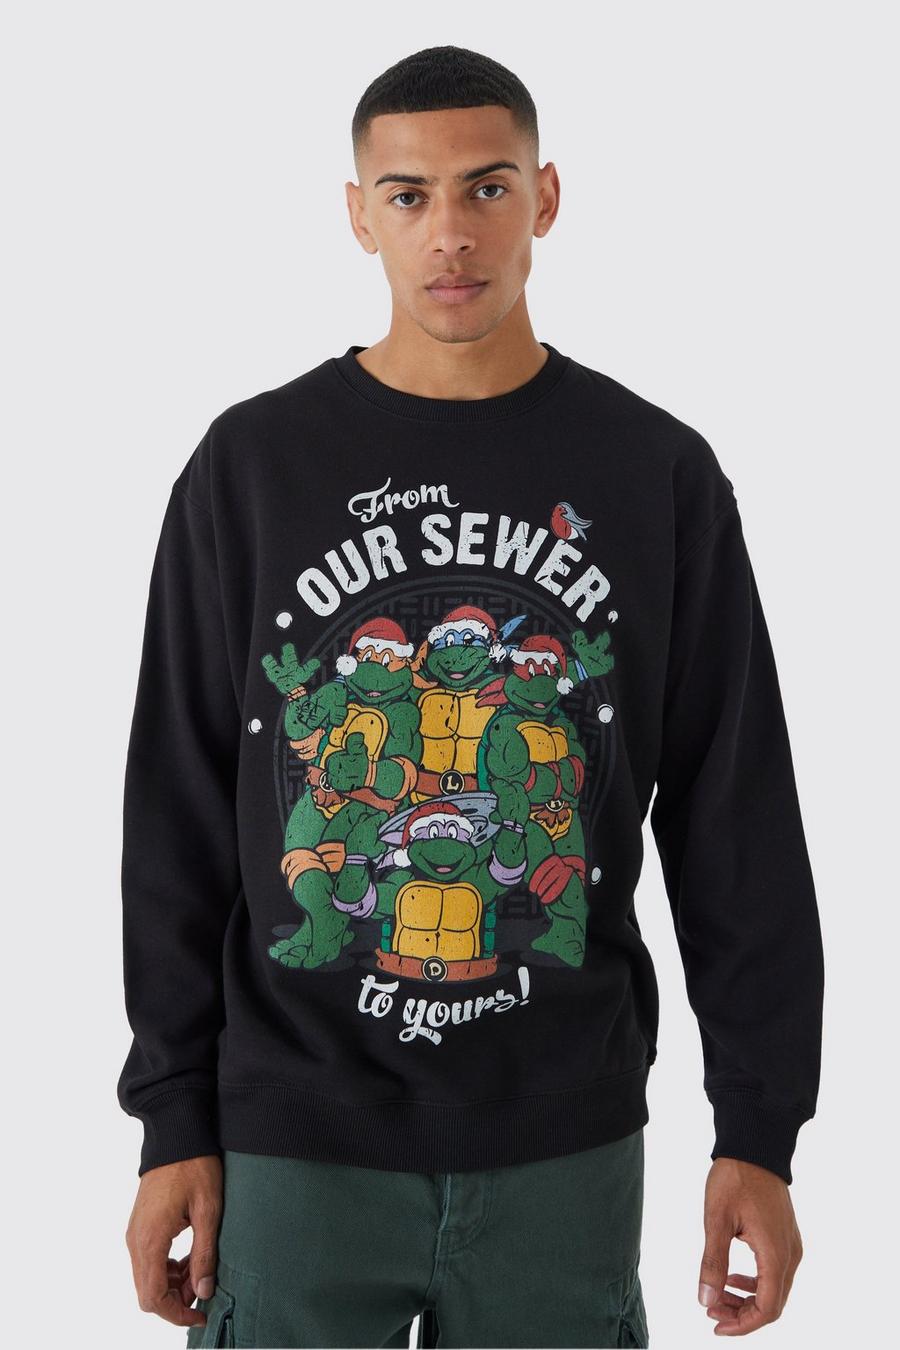 Teenage Mutant Ninja Turtles Shirt Men Large Green Y2K Pullover